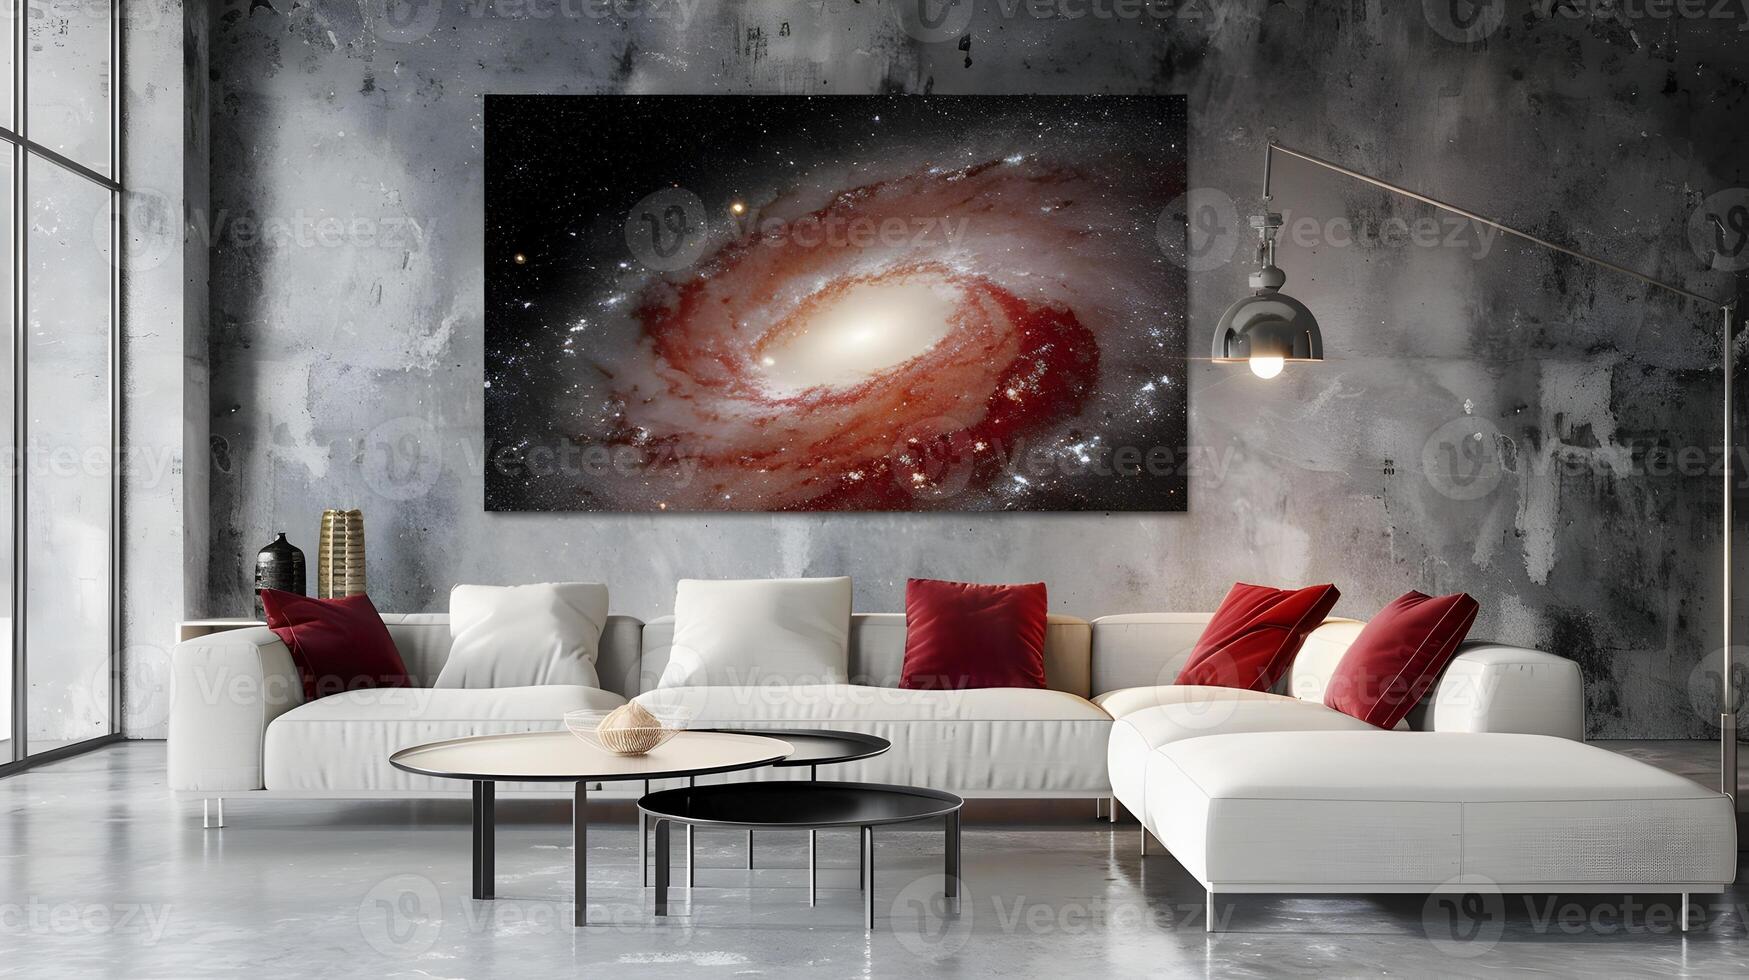 asombroso cósmico paisaje en moderno hogar interior diseño foto